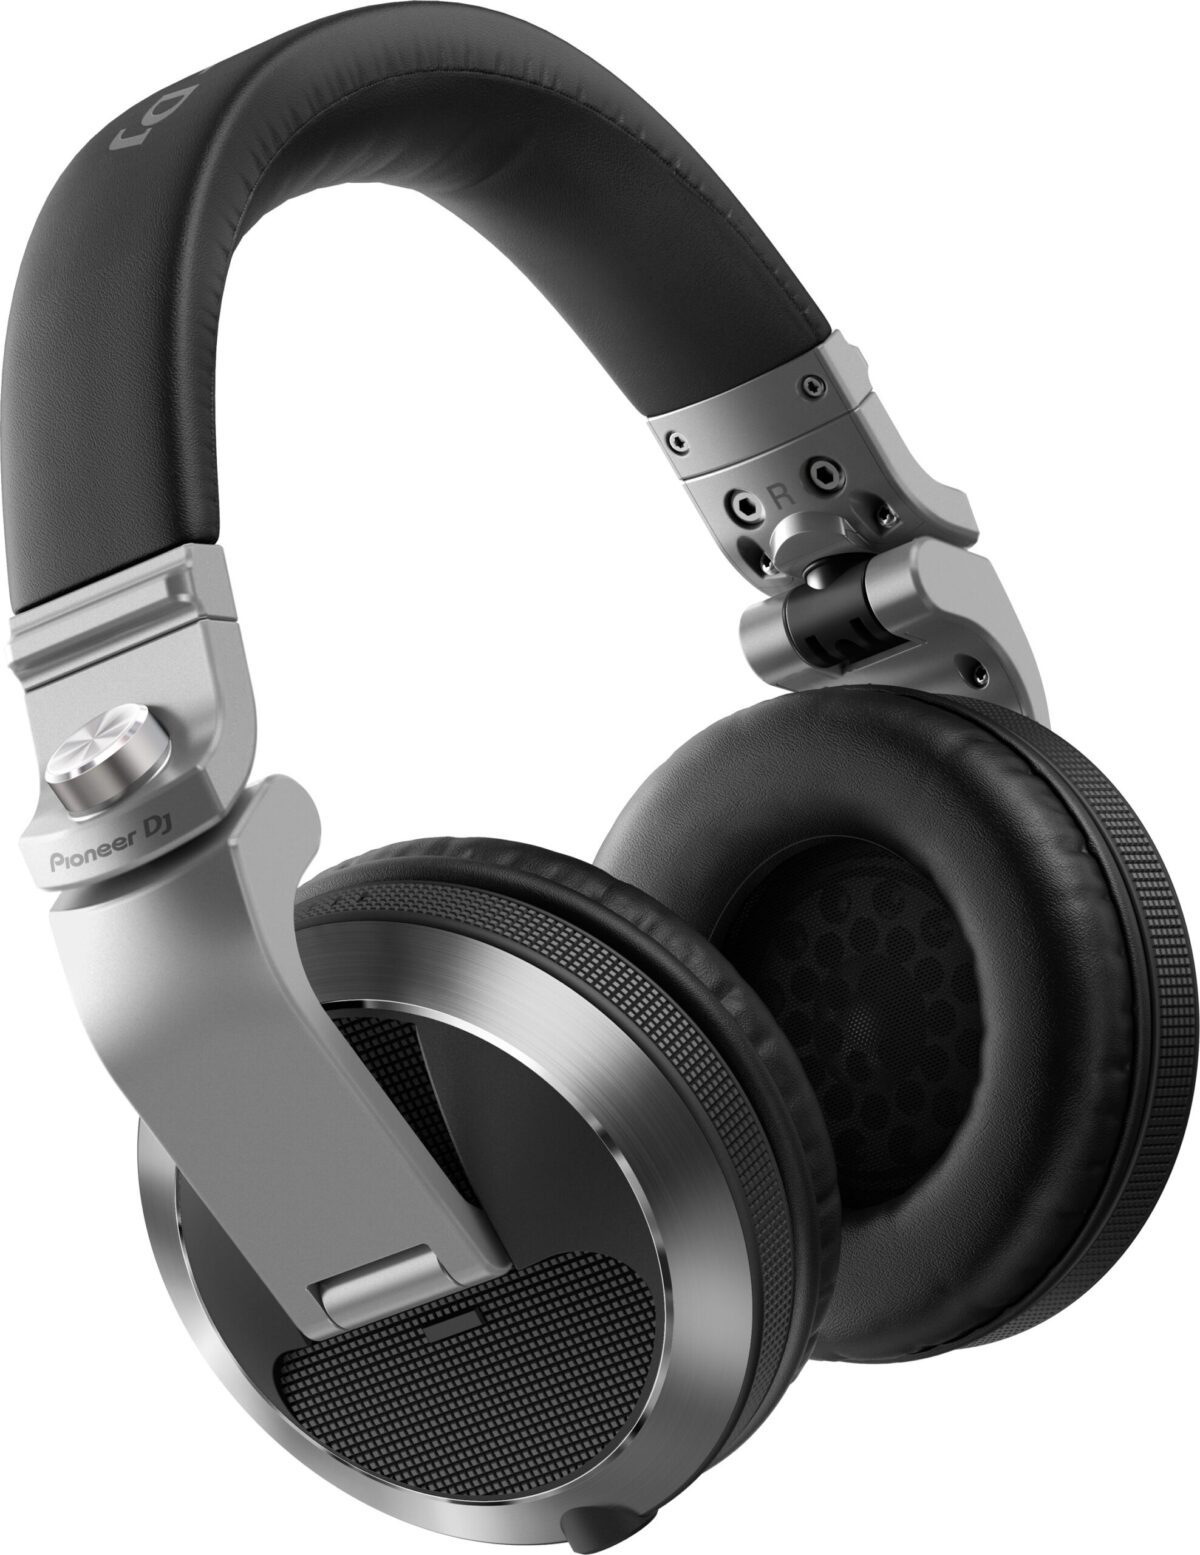 HDJ-X7 Professional over-ear DJ headphones (silver)